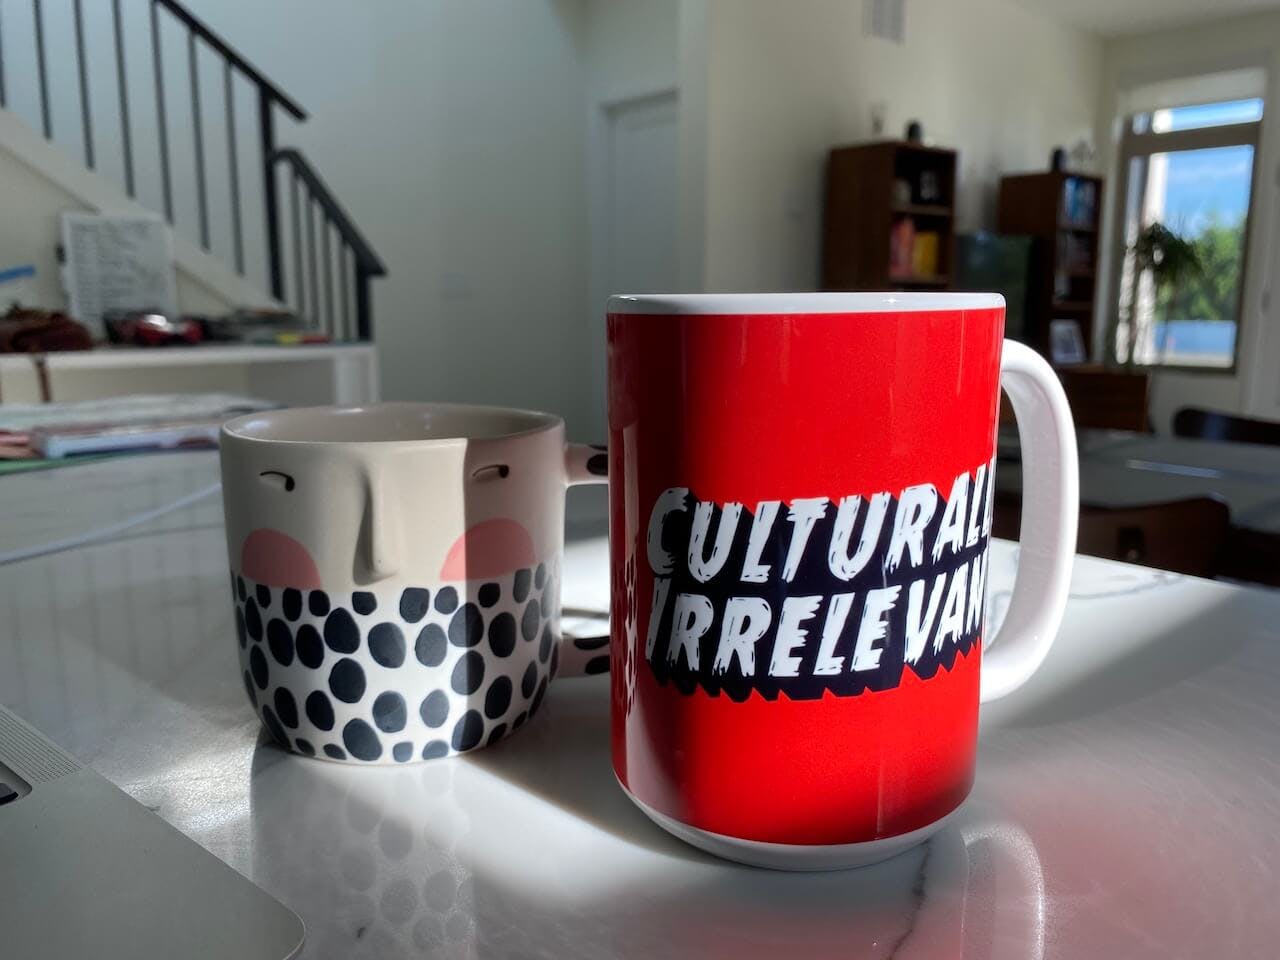 A Culturally Irrelevant mug.